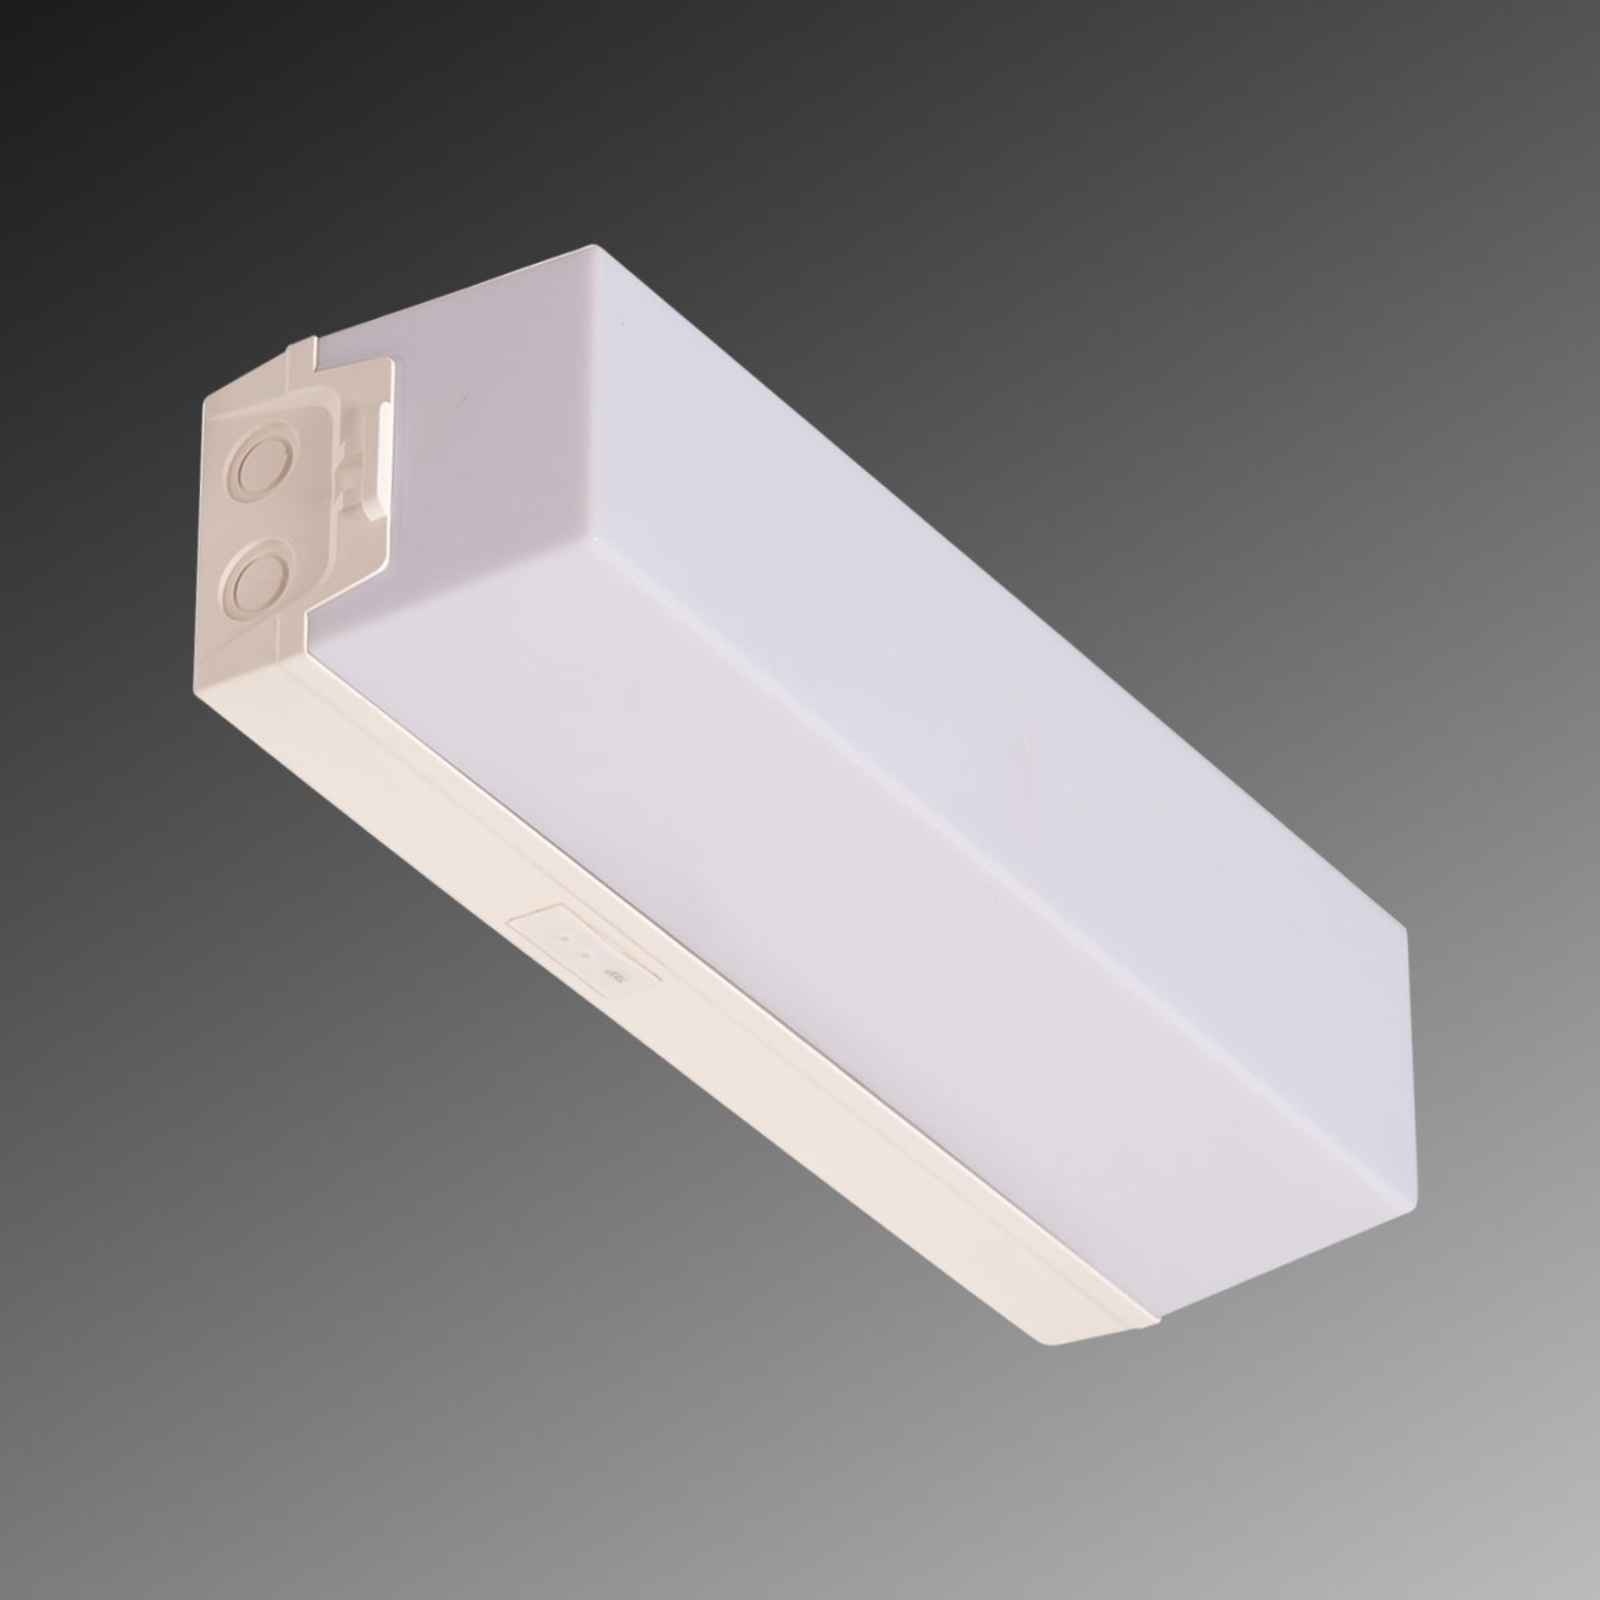 LED emergency exit light C-LUX Standard, single battery